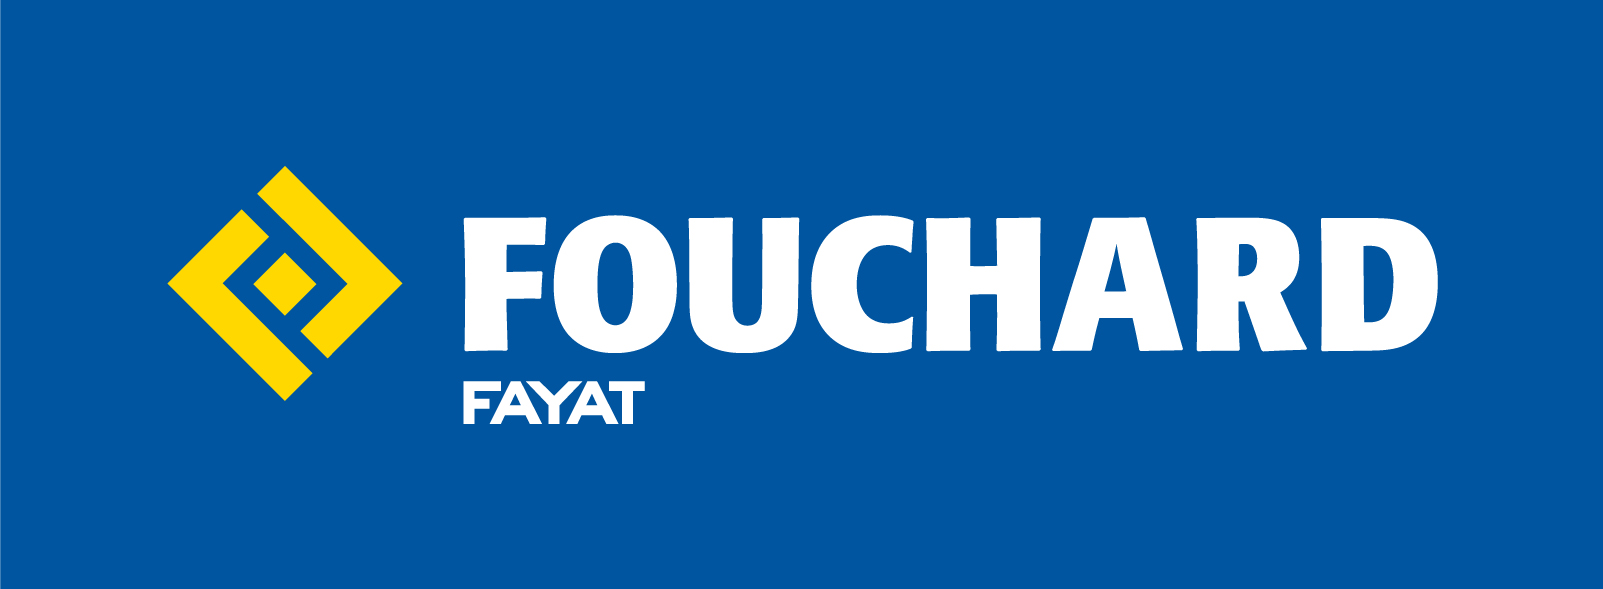 Fouchard_coloured_logo_blue_background.jpg